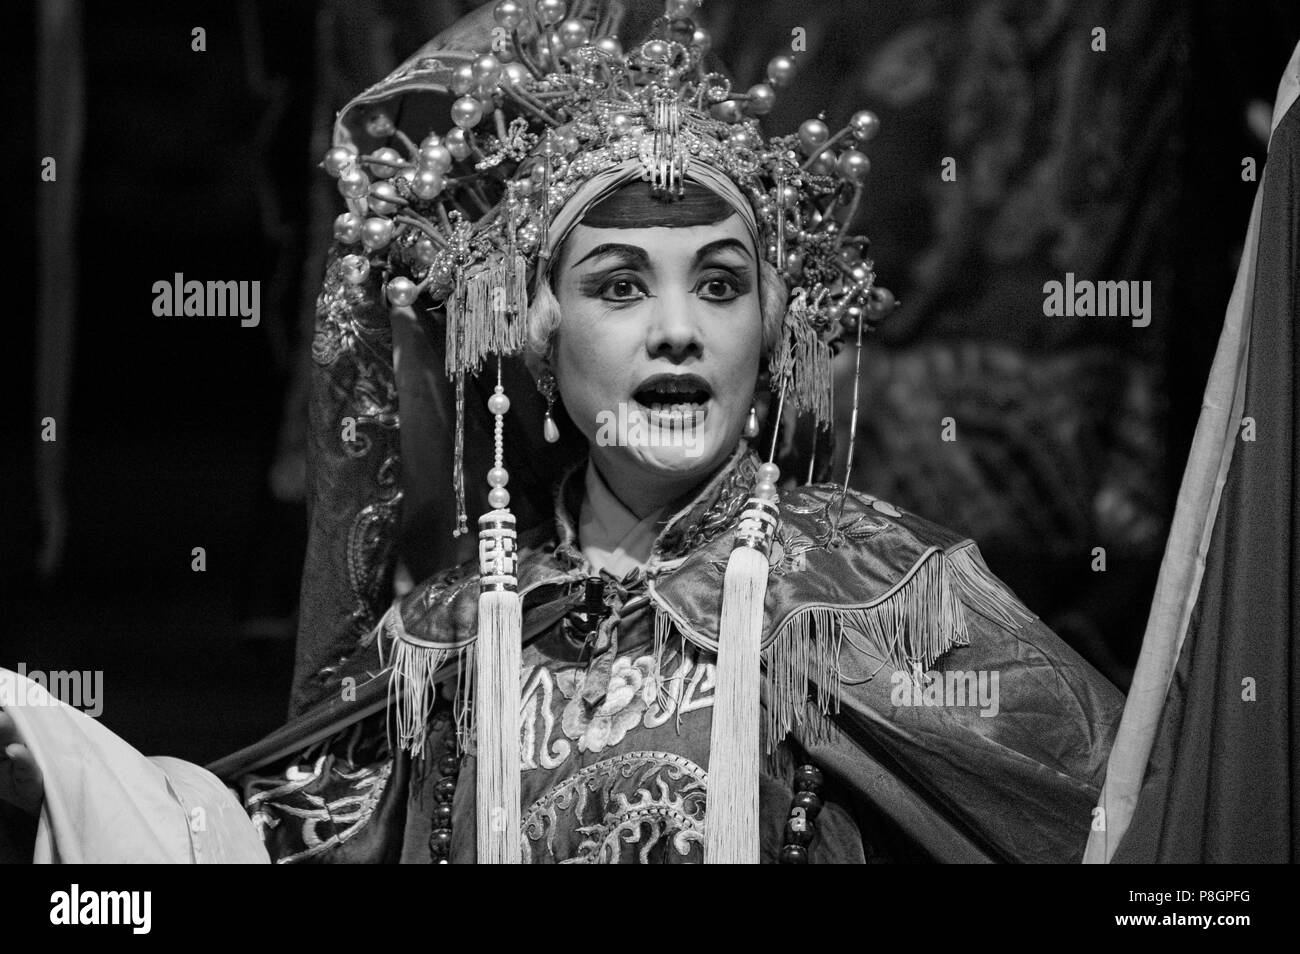 Estrella femenina en traje completo de preformas en la ópera china - Chengdu, China, en la provincia de Sichuan Foto de stock